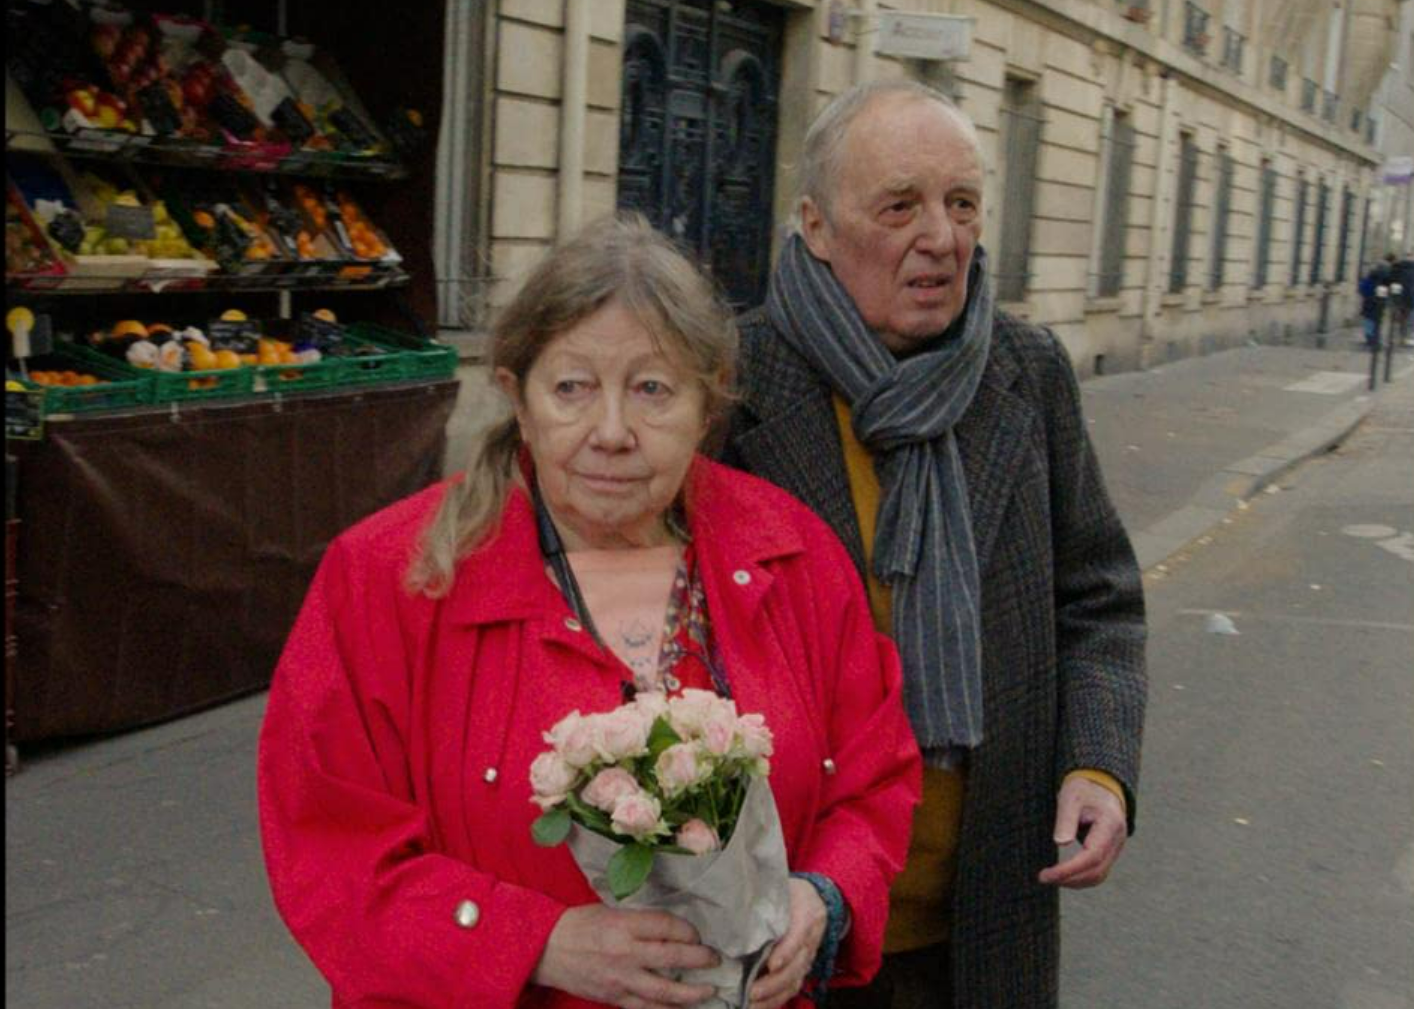 Dario Argento and Françoise Lebrun in a scene from "Vortex".